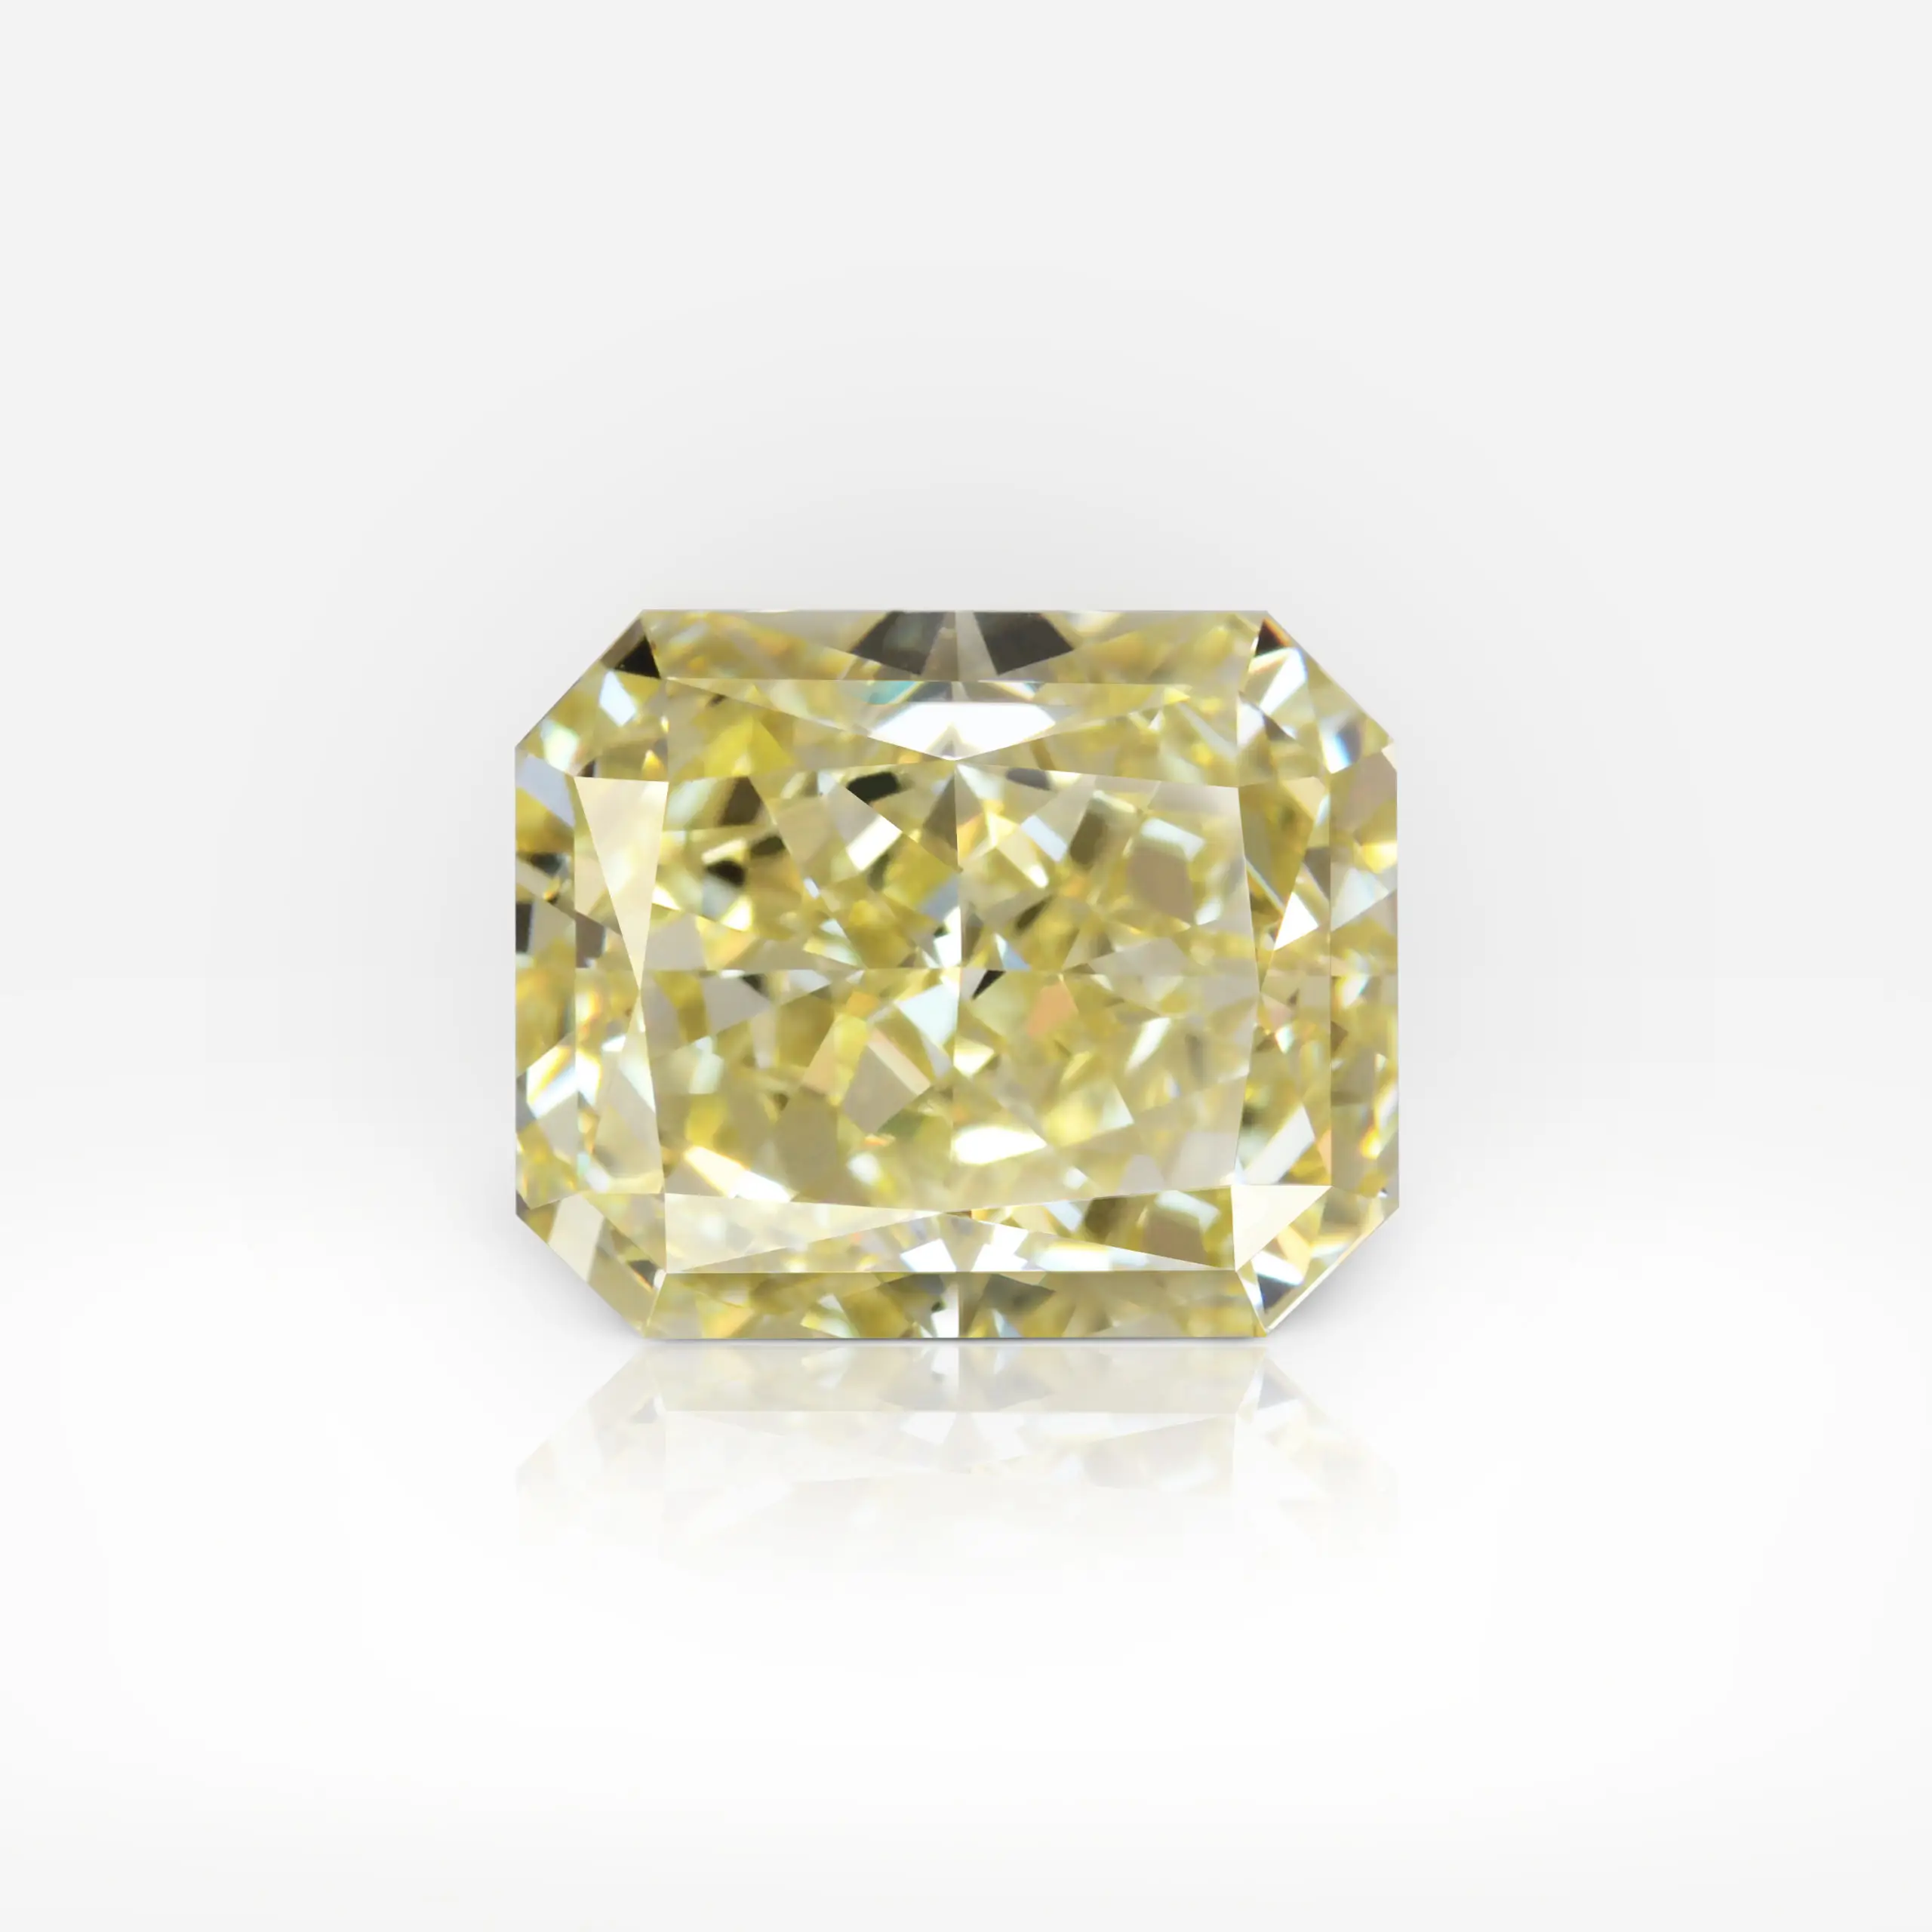 1.83 carat Fancy Yellow VS1 Radiant Shape Diamond GIA - picture 1